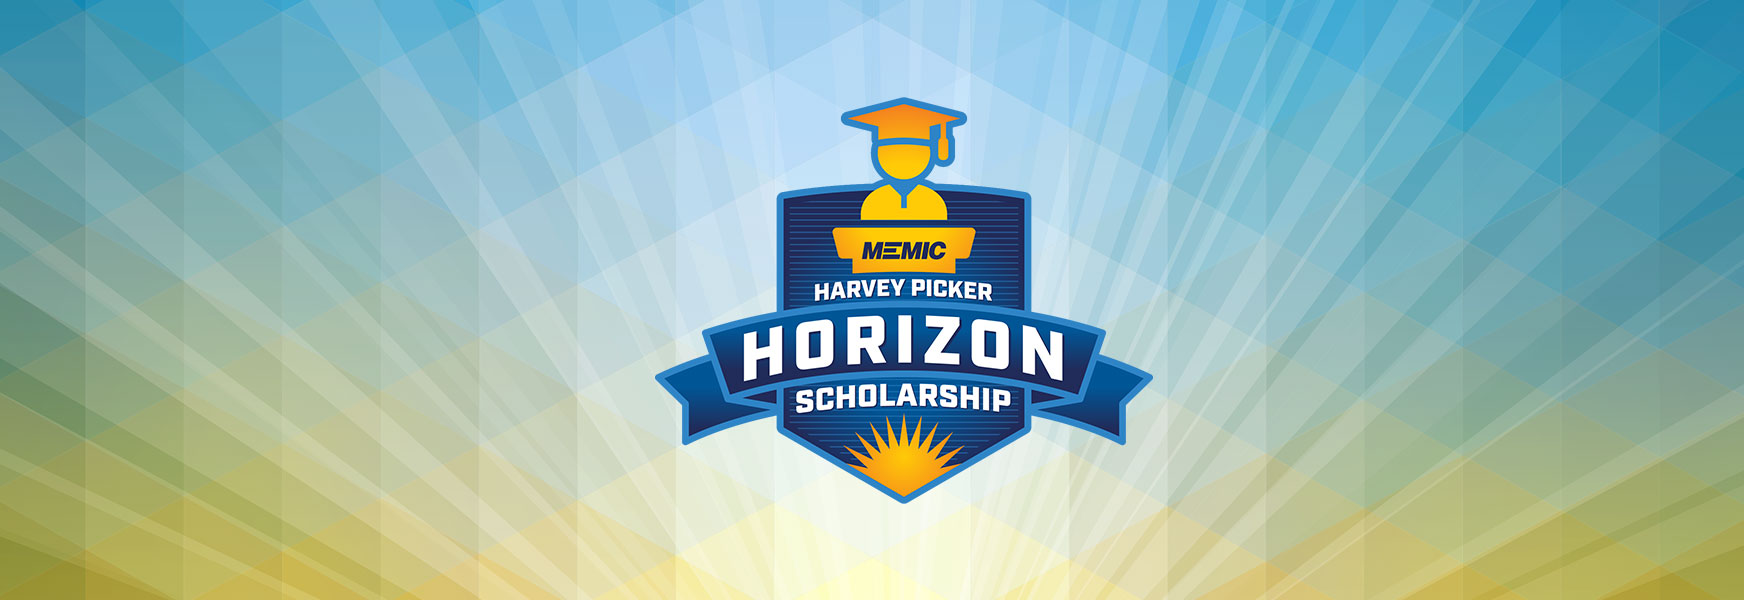 Horizon scholarship logo and graphic header